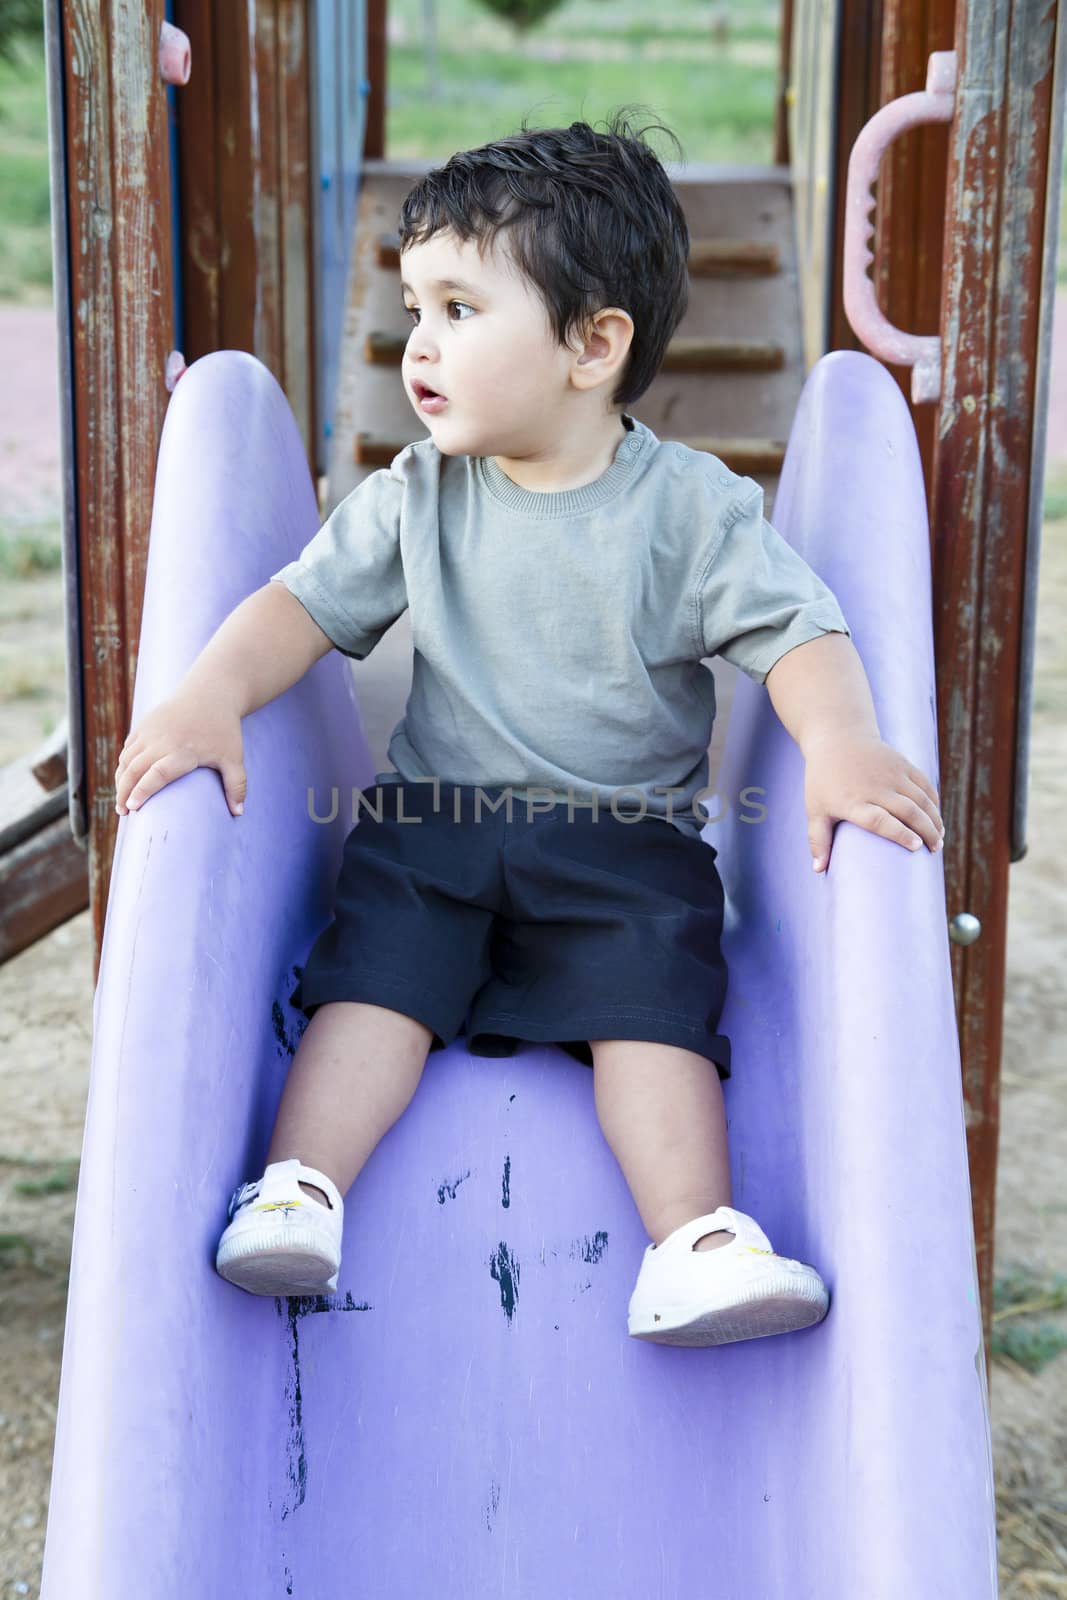 Caucasian baby boy playing on sliding board